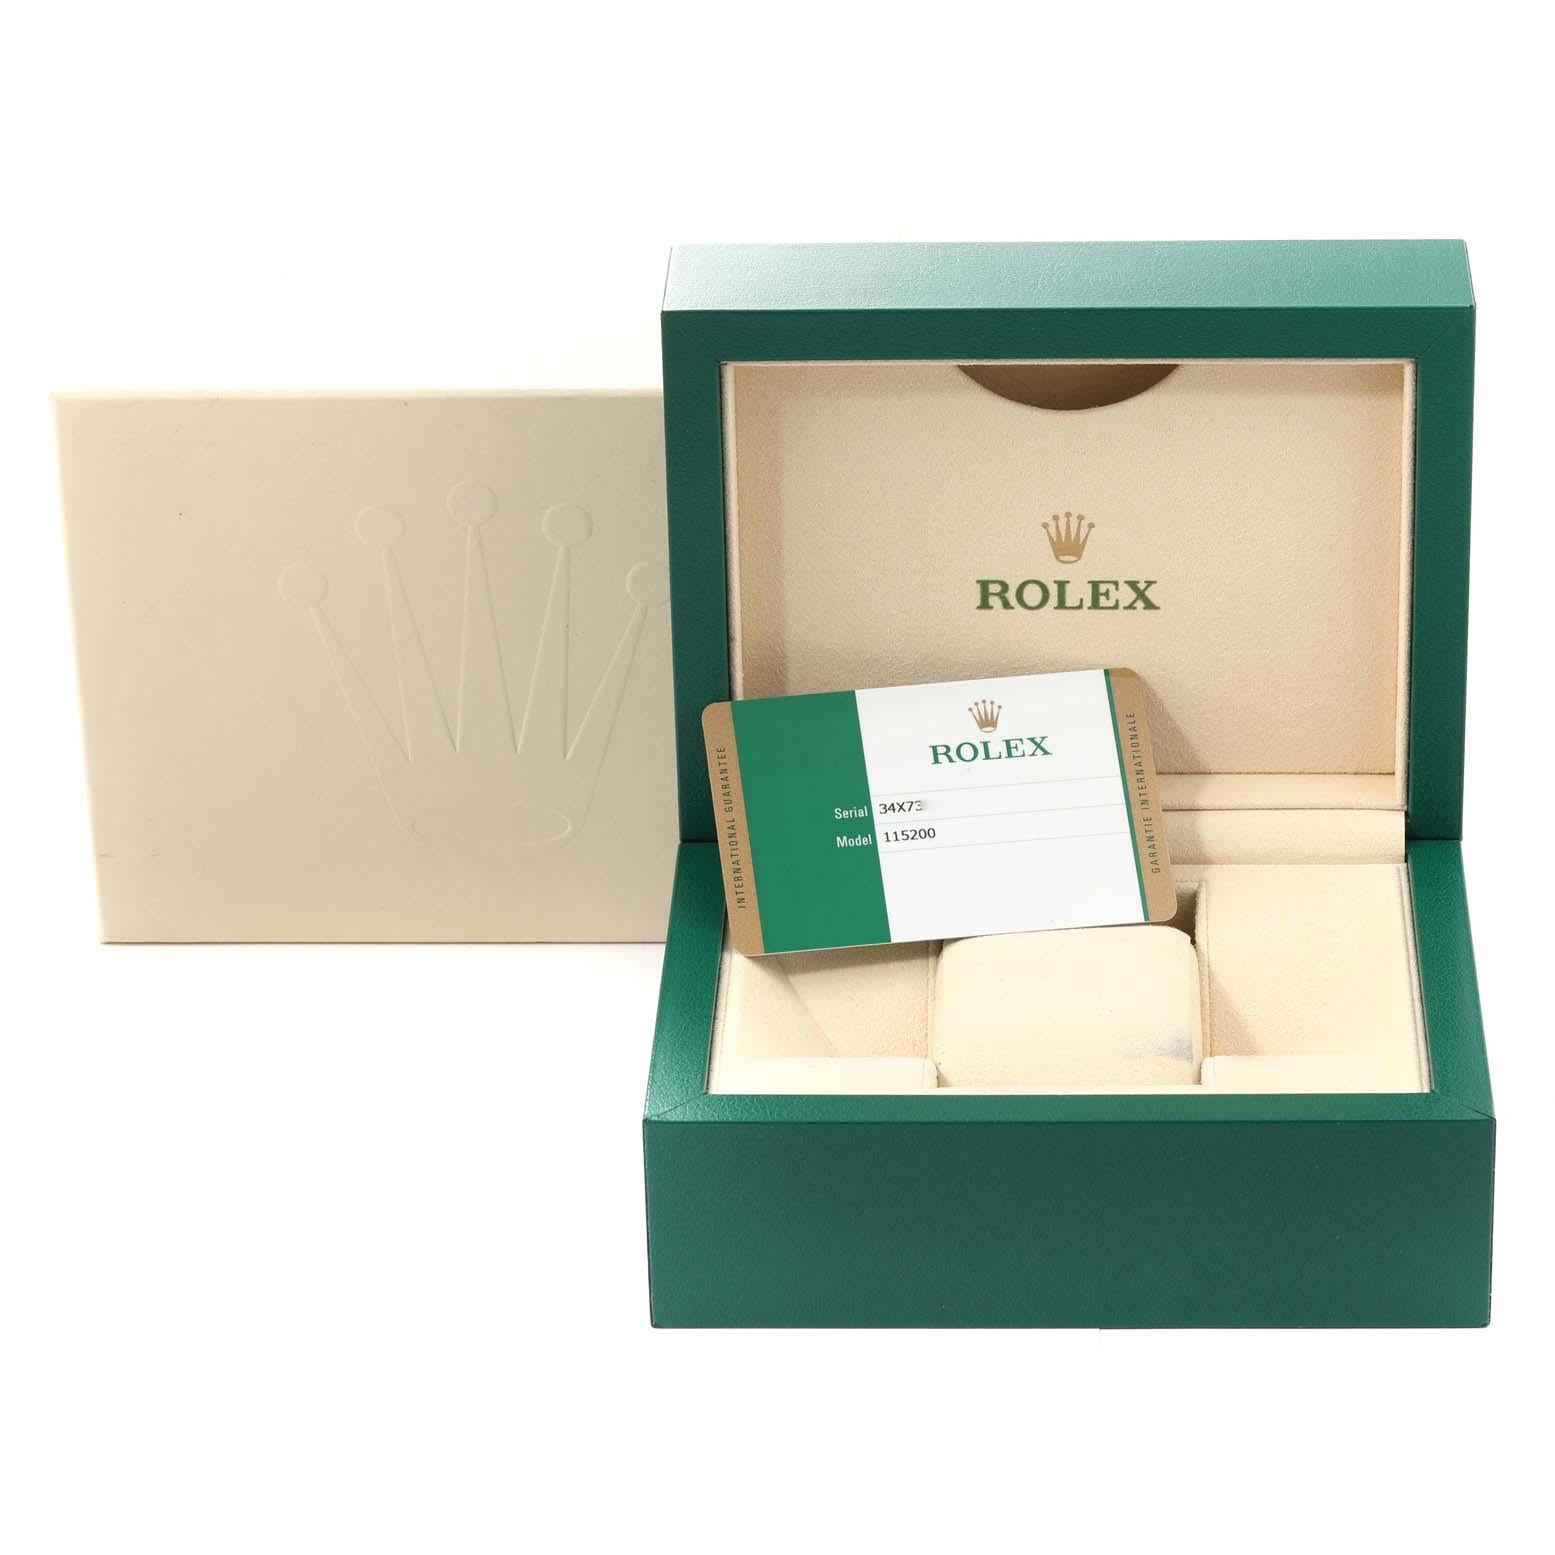 Rolex Date Acero Inoxidable Esfera Azul Reloj Caballero 115200 Caja Tarjeta en venta 6